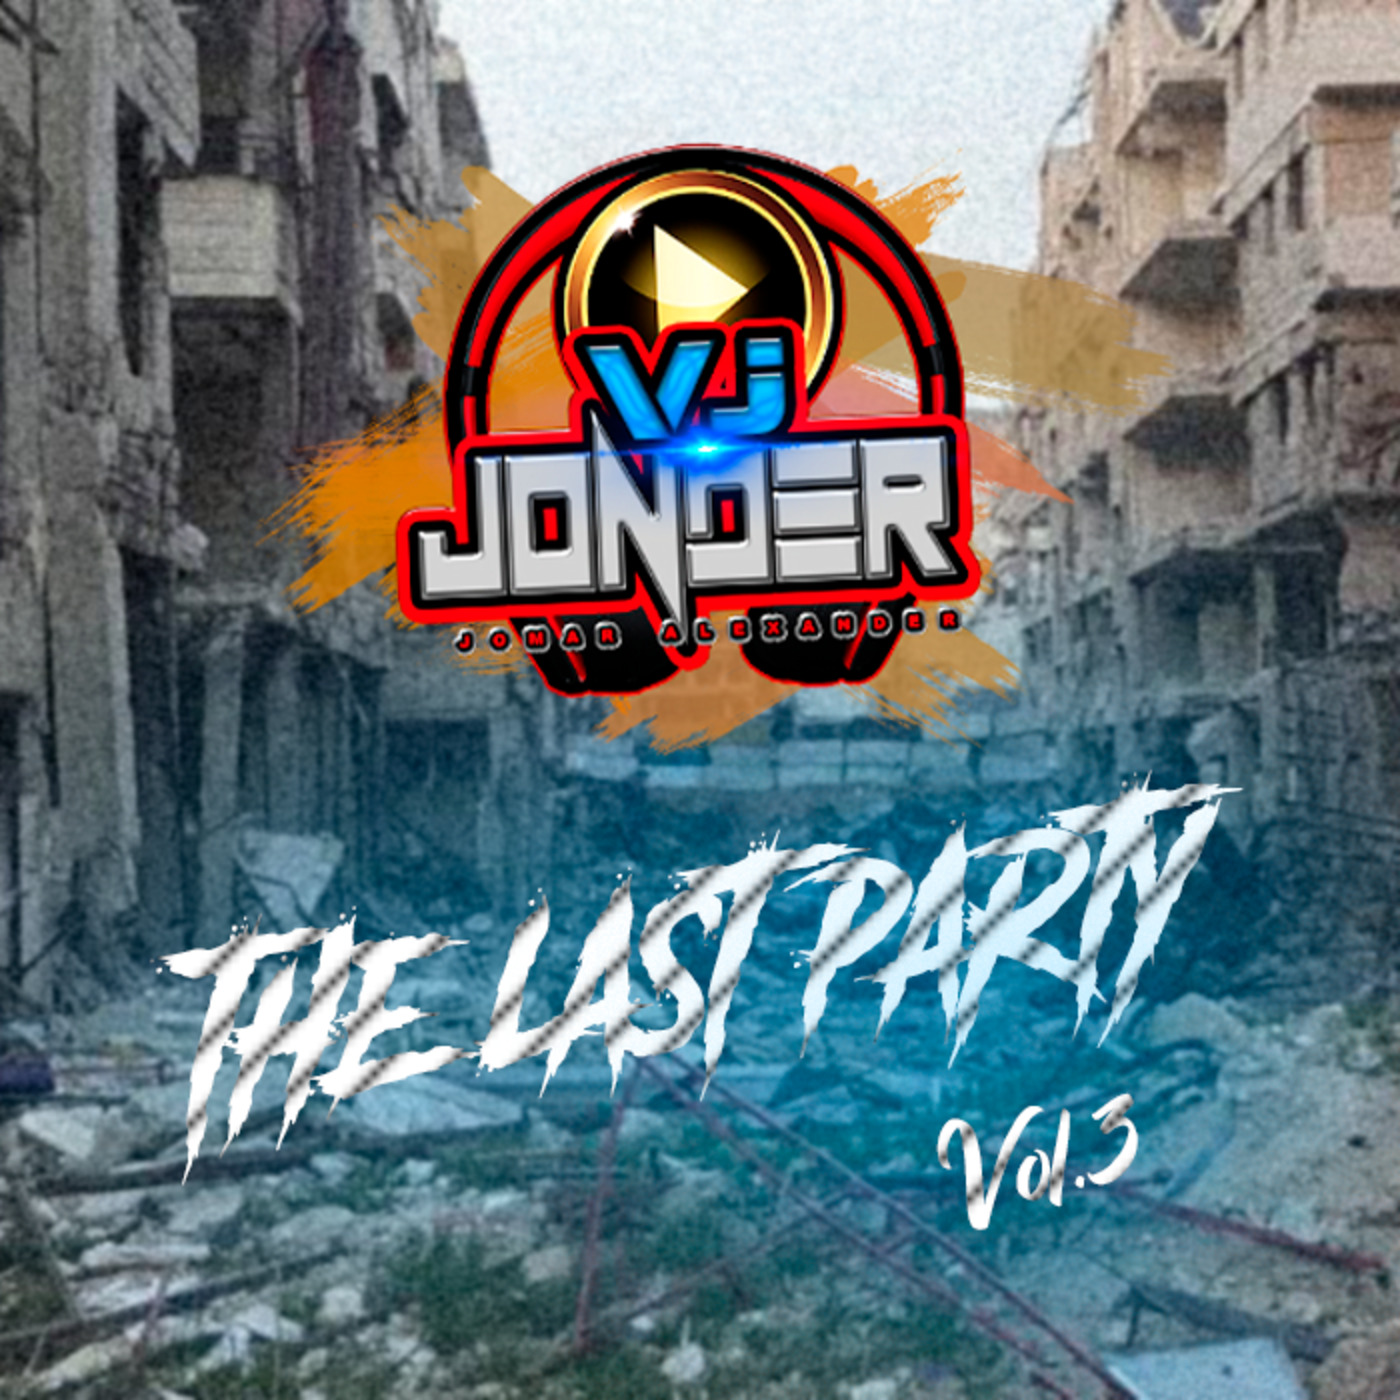 Vj Jonder - The Last Party Vol.3